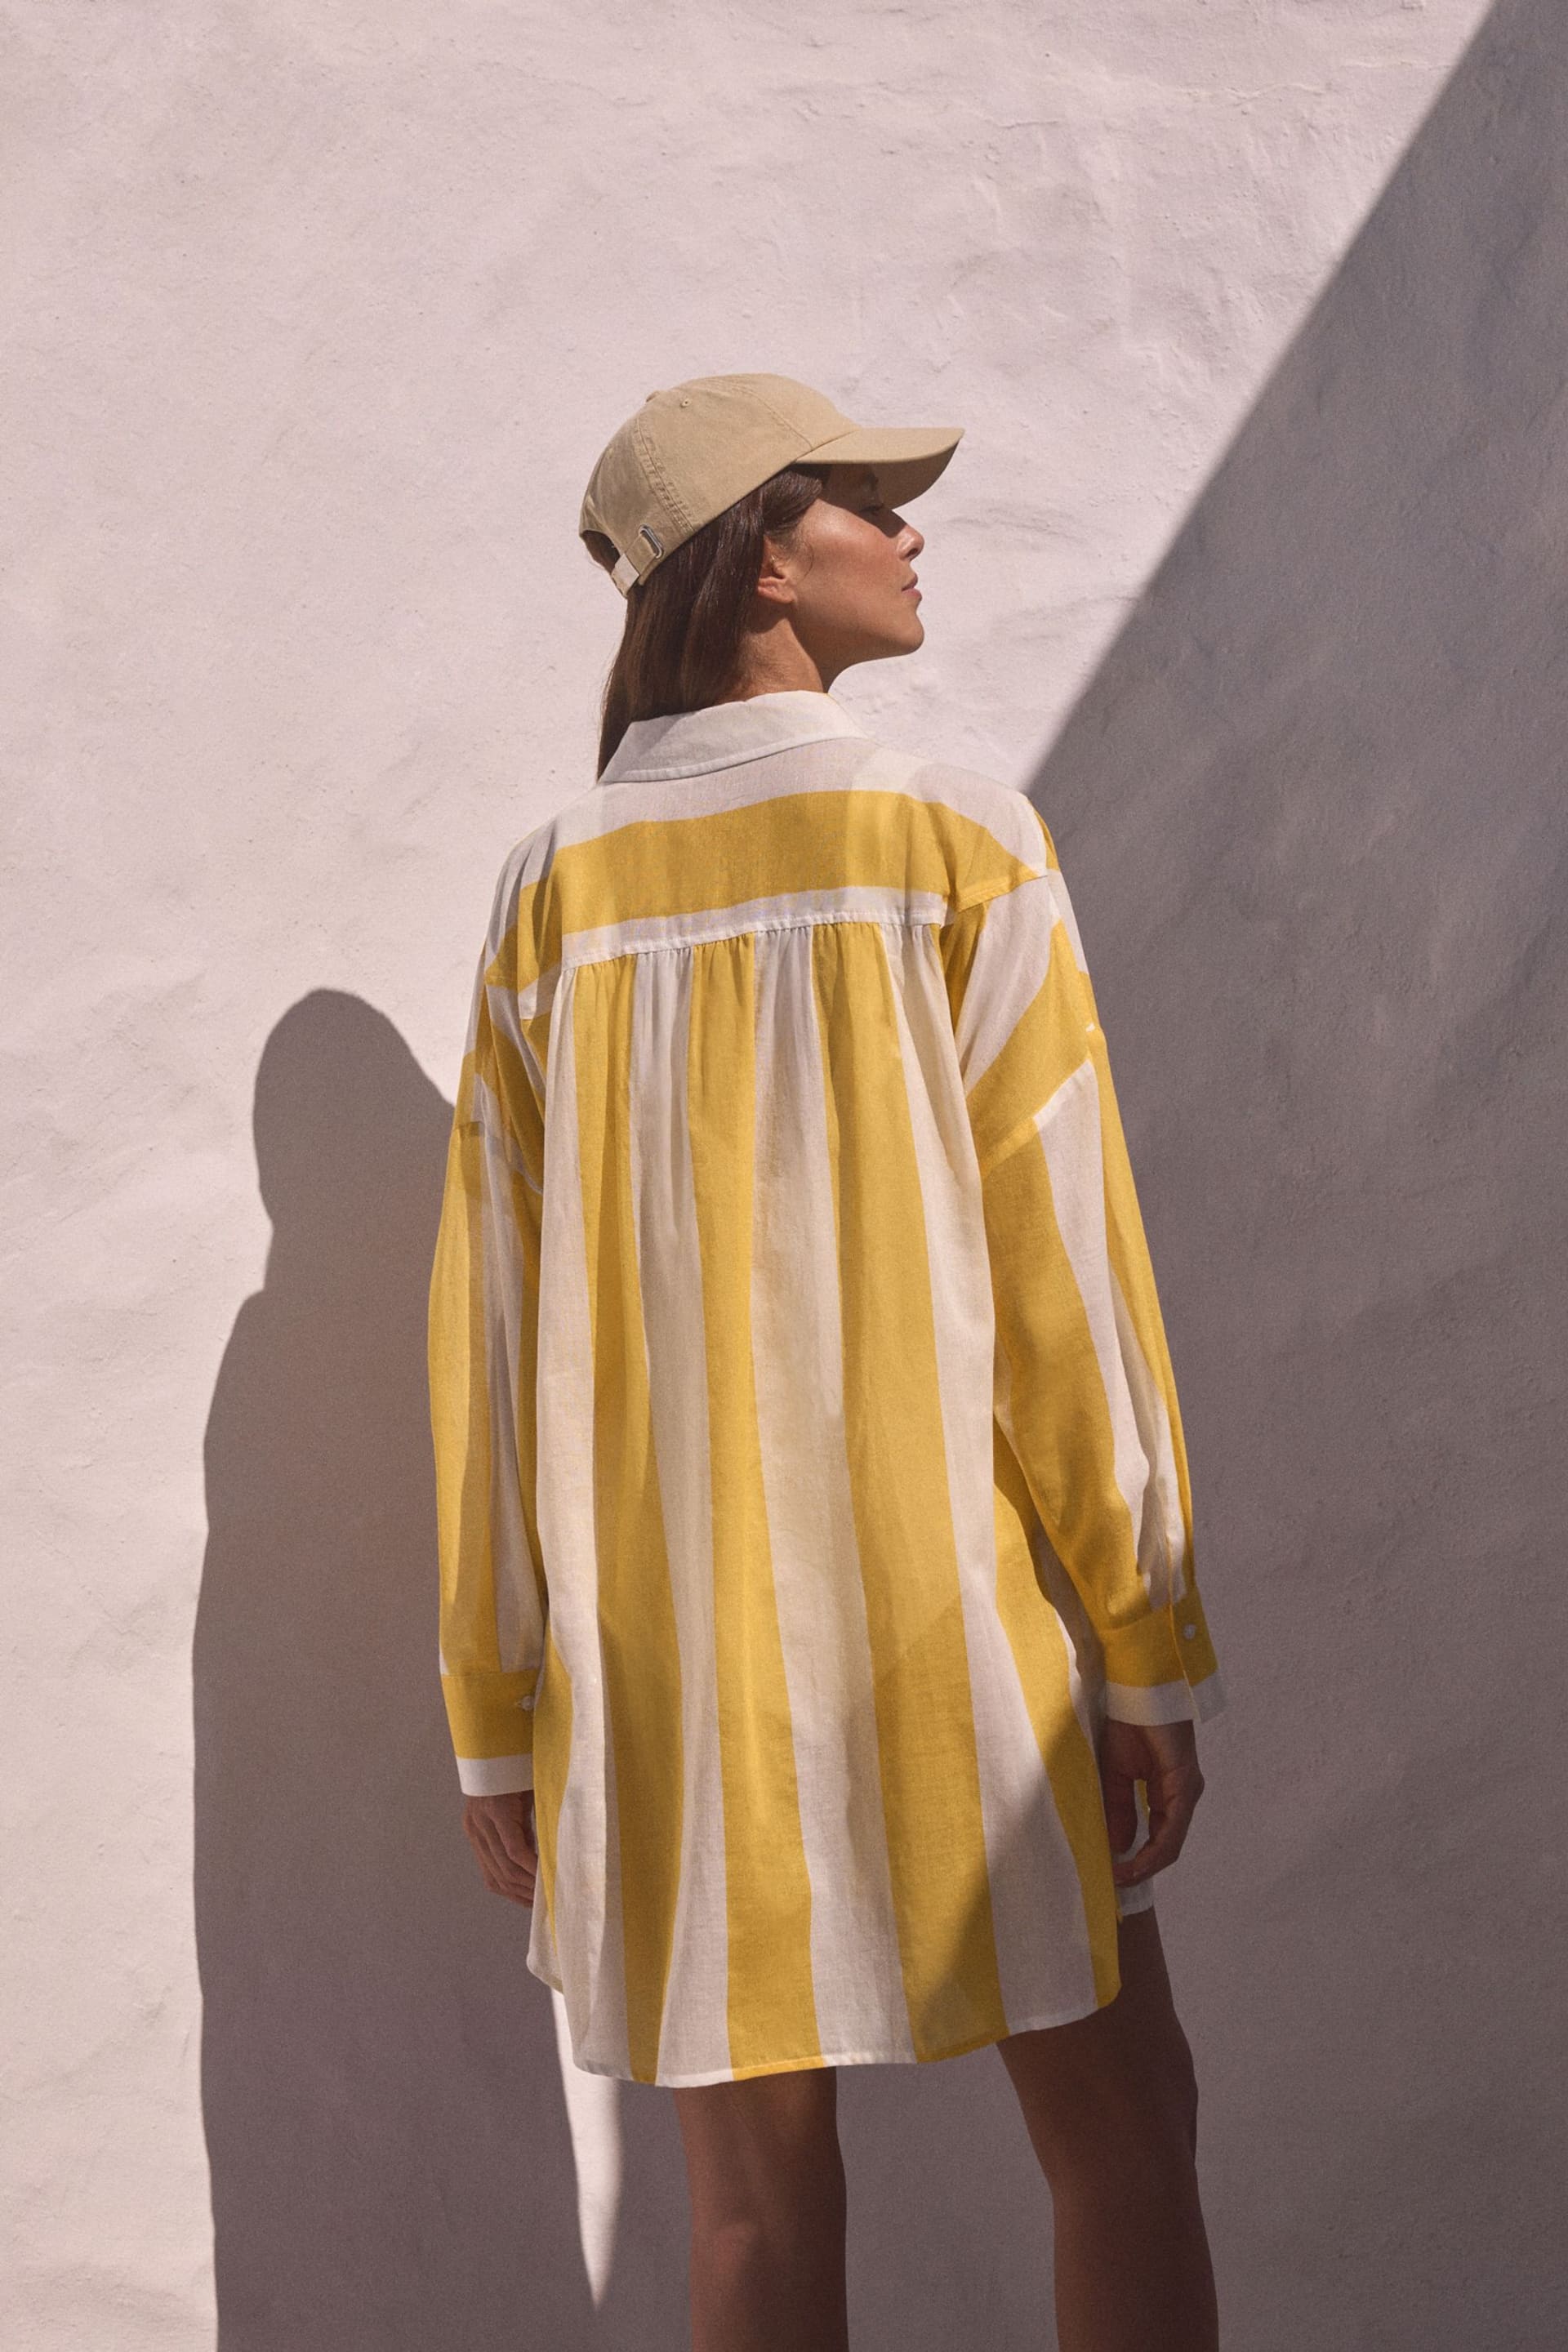 Yellow/White Stripe Beach Shirt Cover-Up - Image 3 of 3